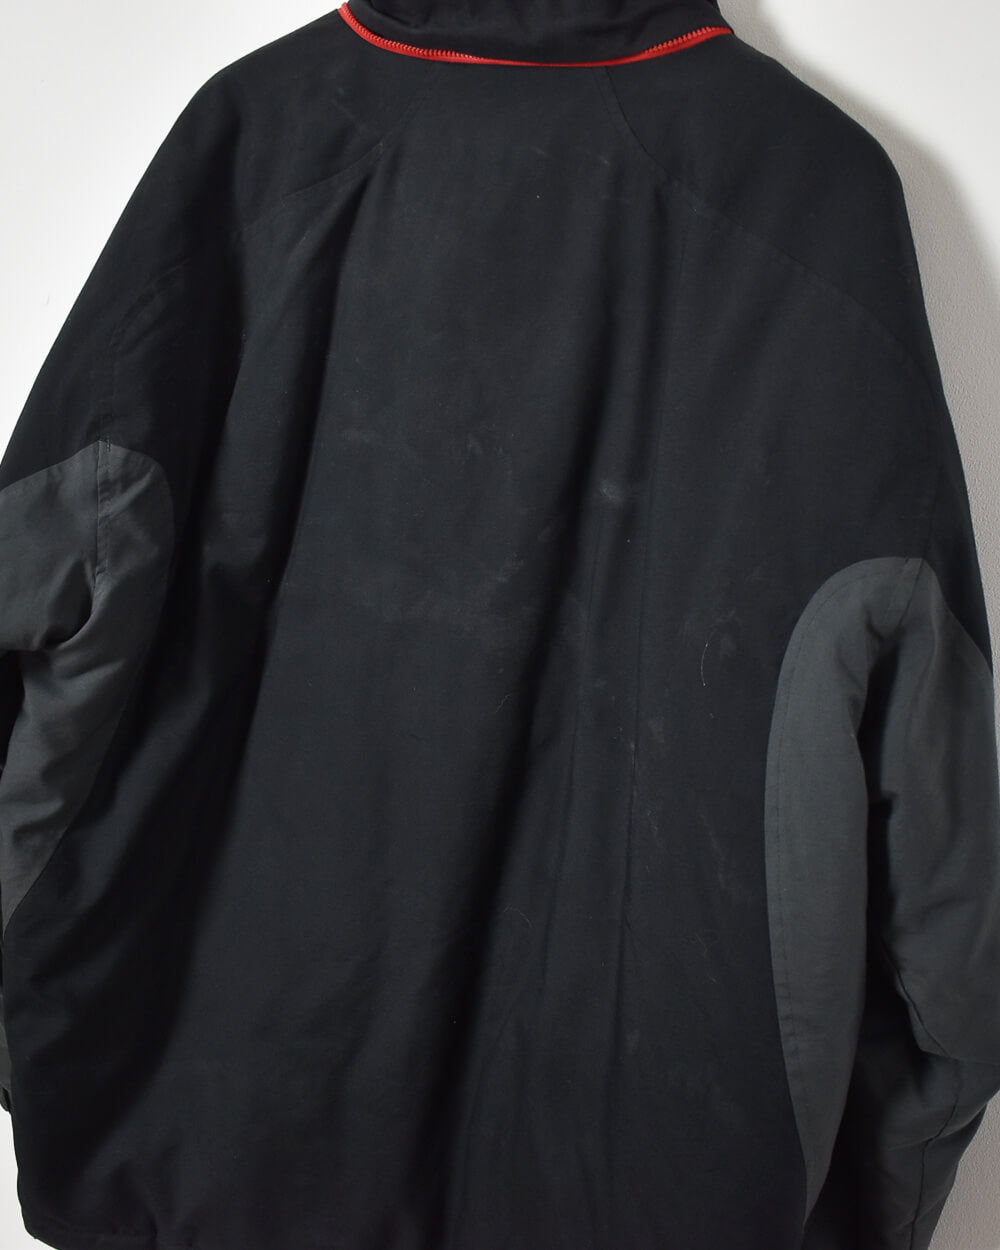 Black Nike Winter Coat -  X-Large